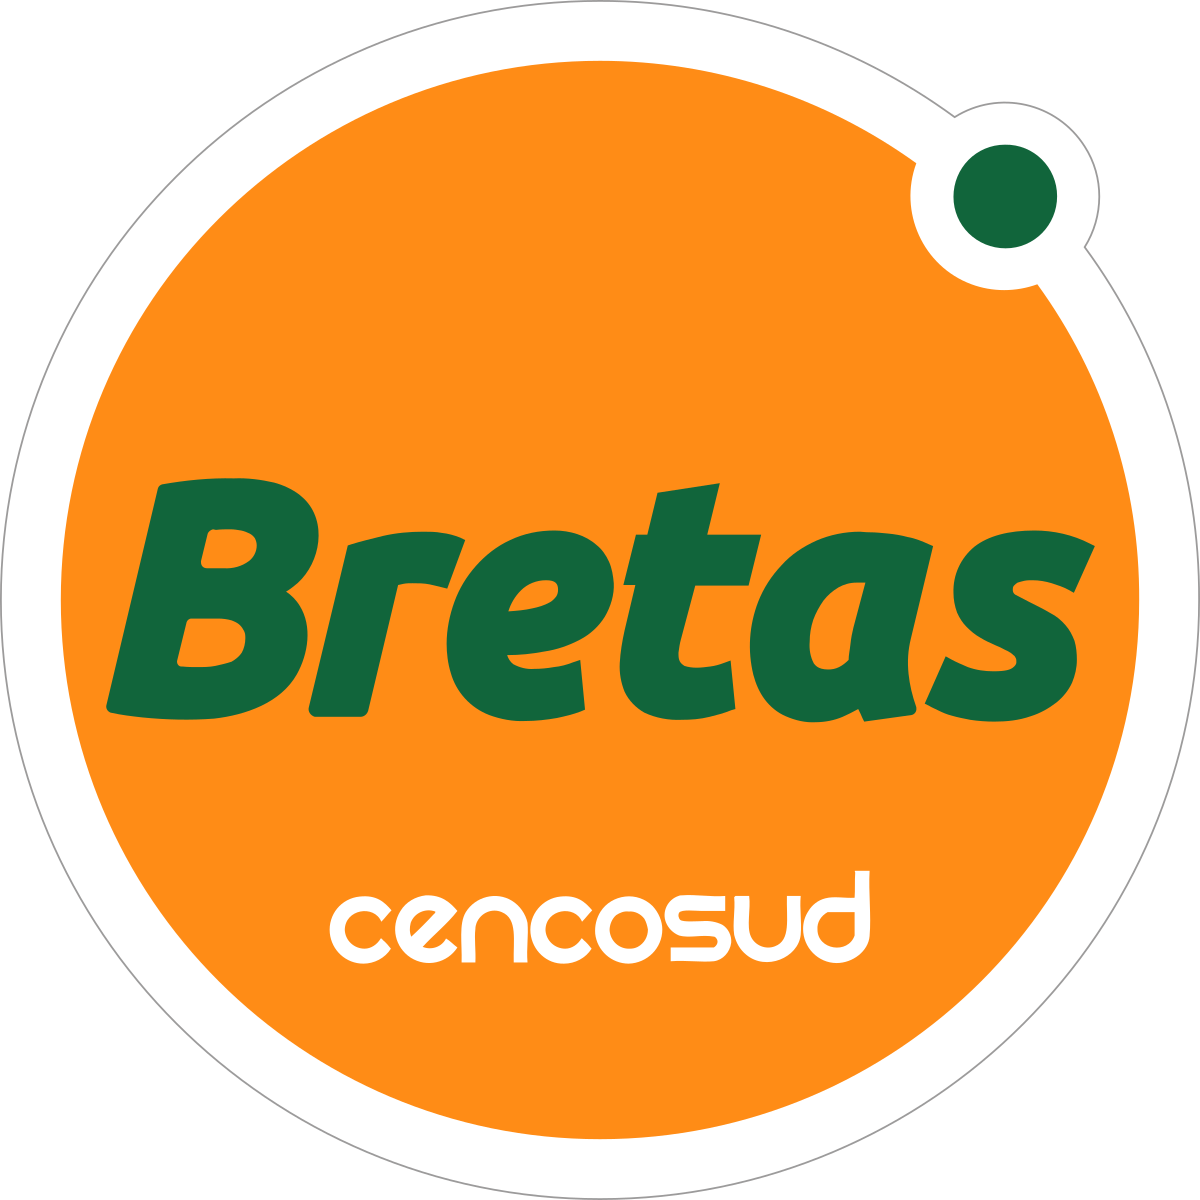 Bretas - Cencosud